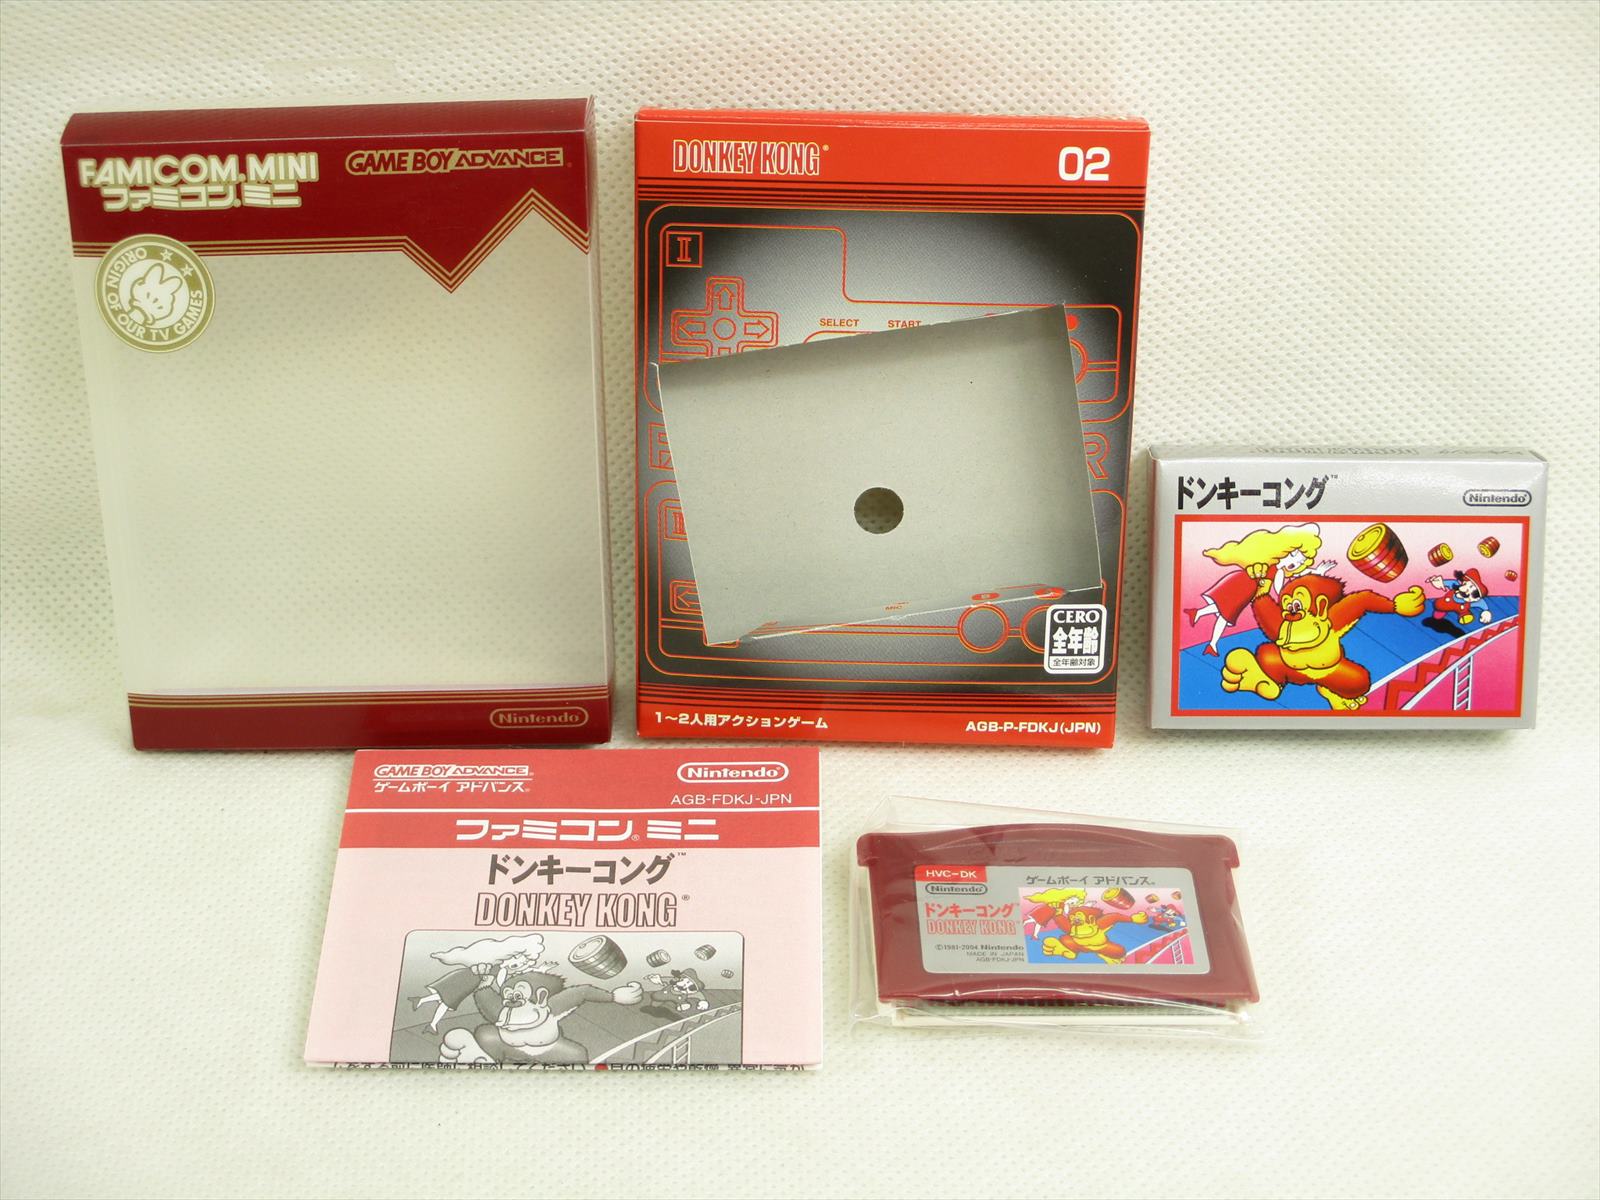 DONKEY KONG Famicom Mini Game Boy Advance Nintendo gba 4902370506709 | eBay